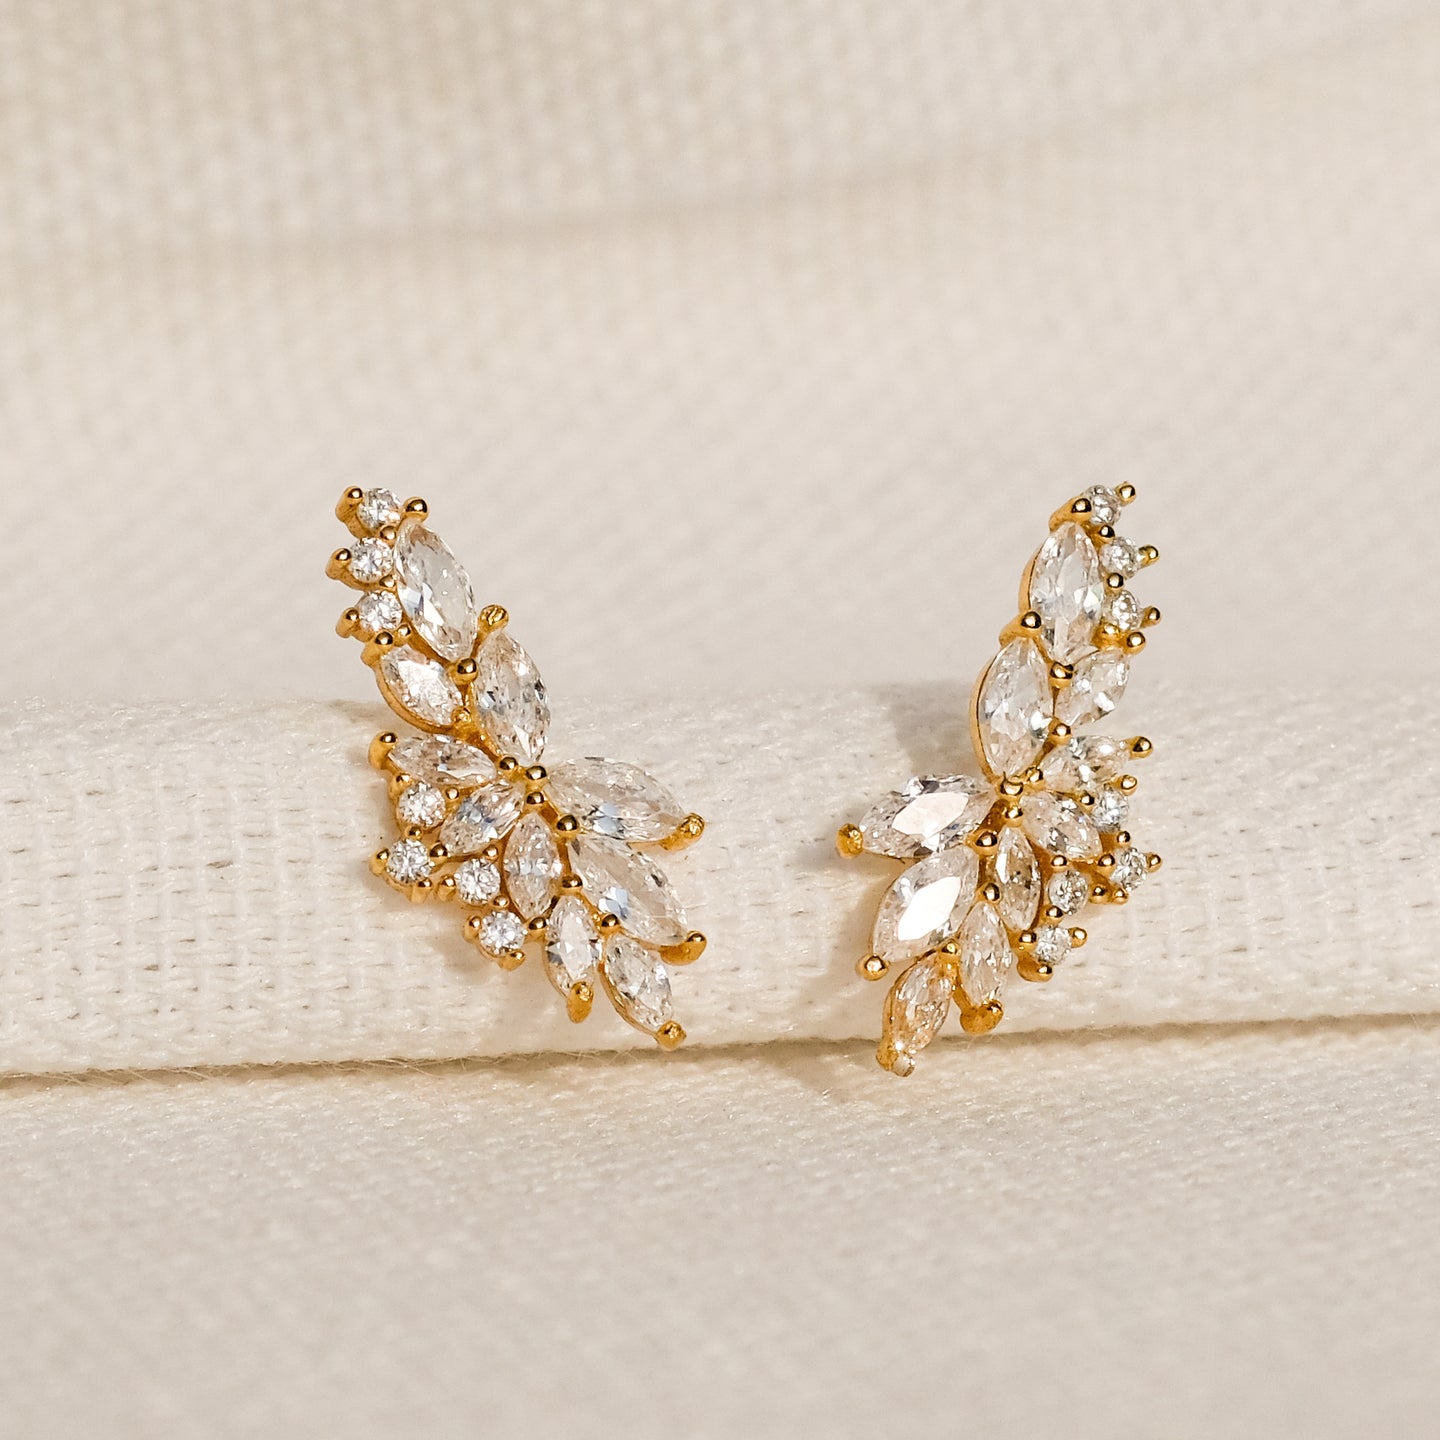 products/petalia-cz-stud-earrings-18k-gold-vermeil-1.jpg